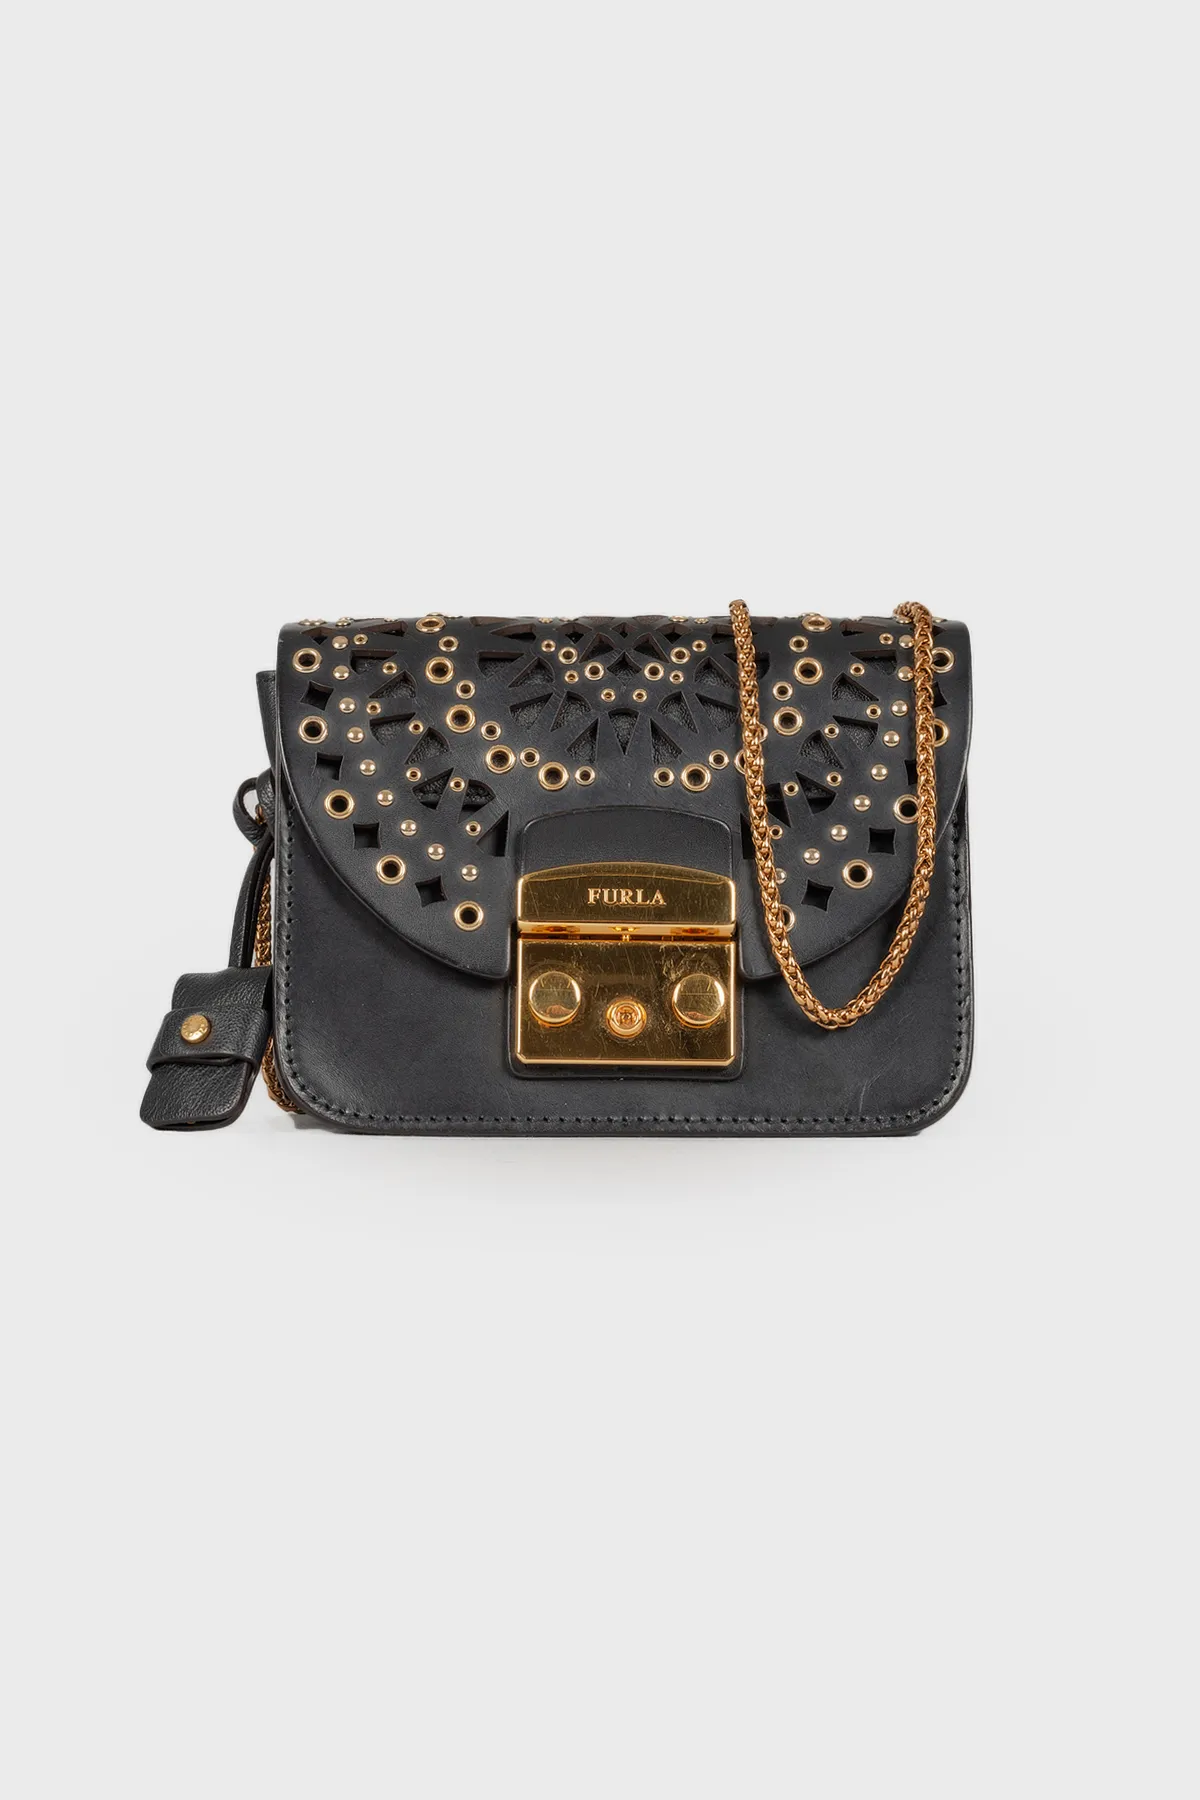 Furla Authenticated Leather Handbag